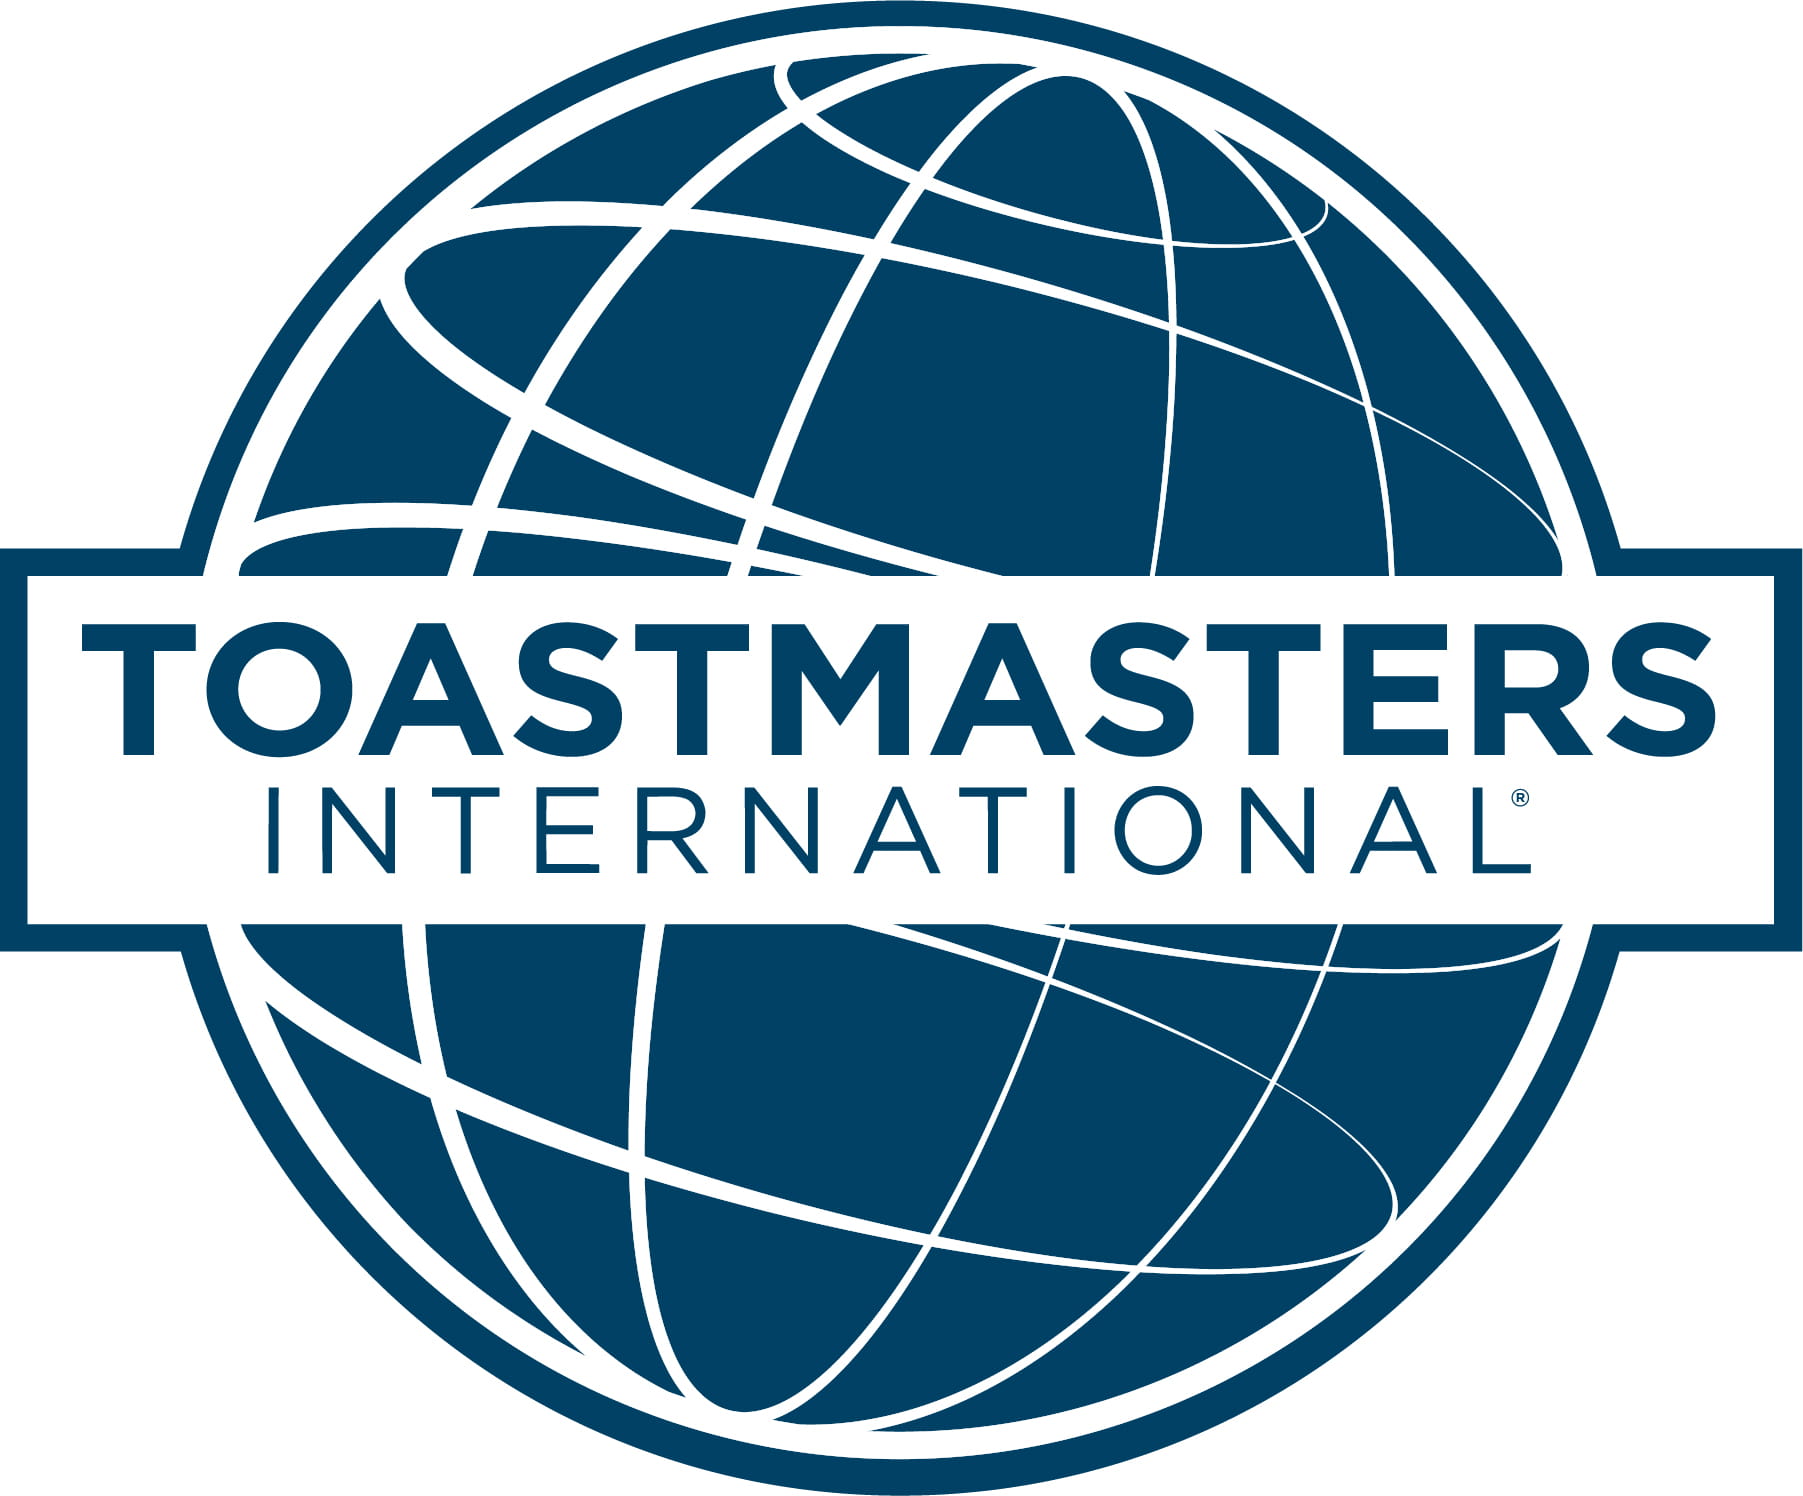 Toastmasters International -Logo and Design Elements